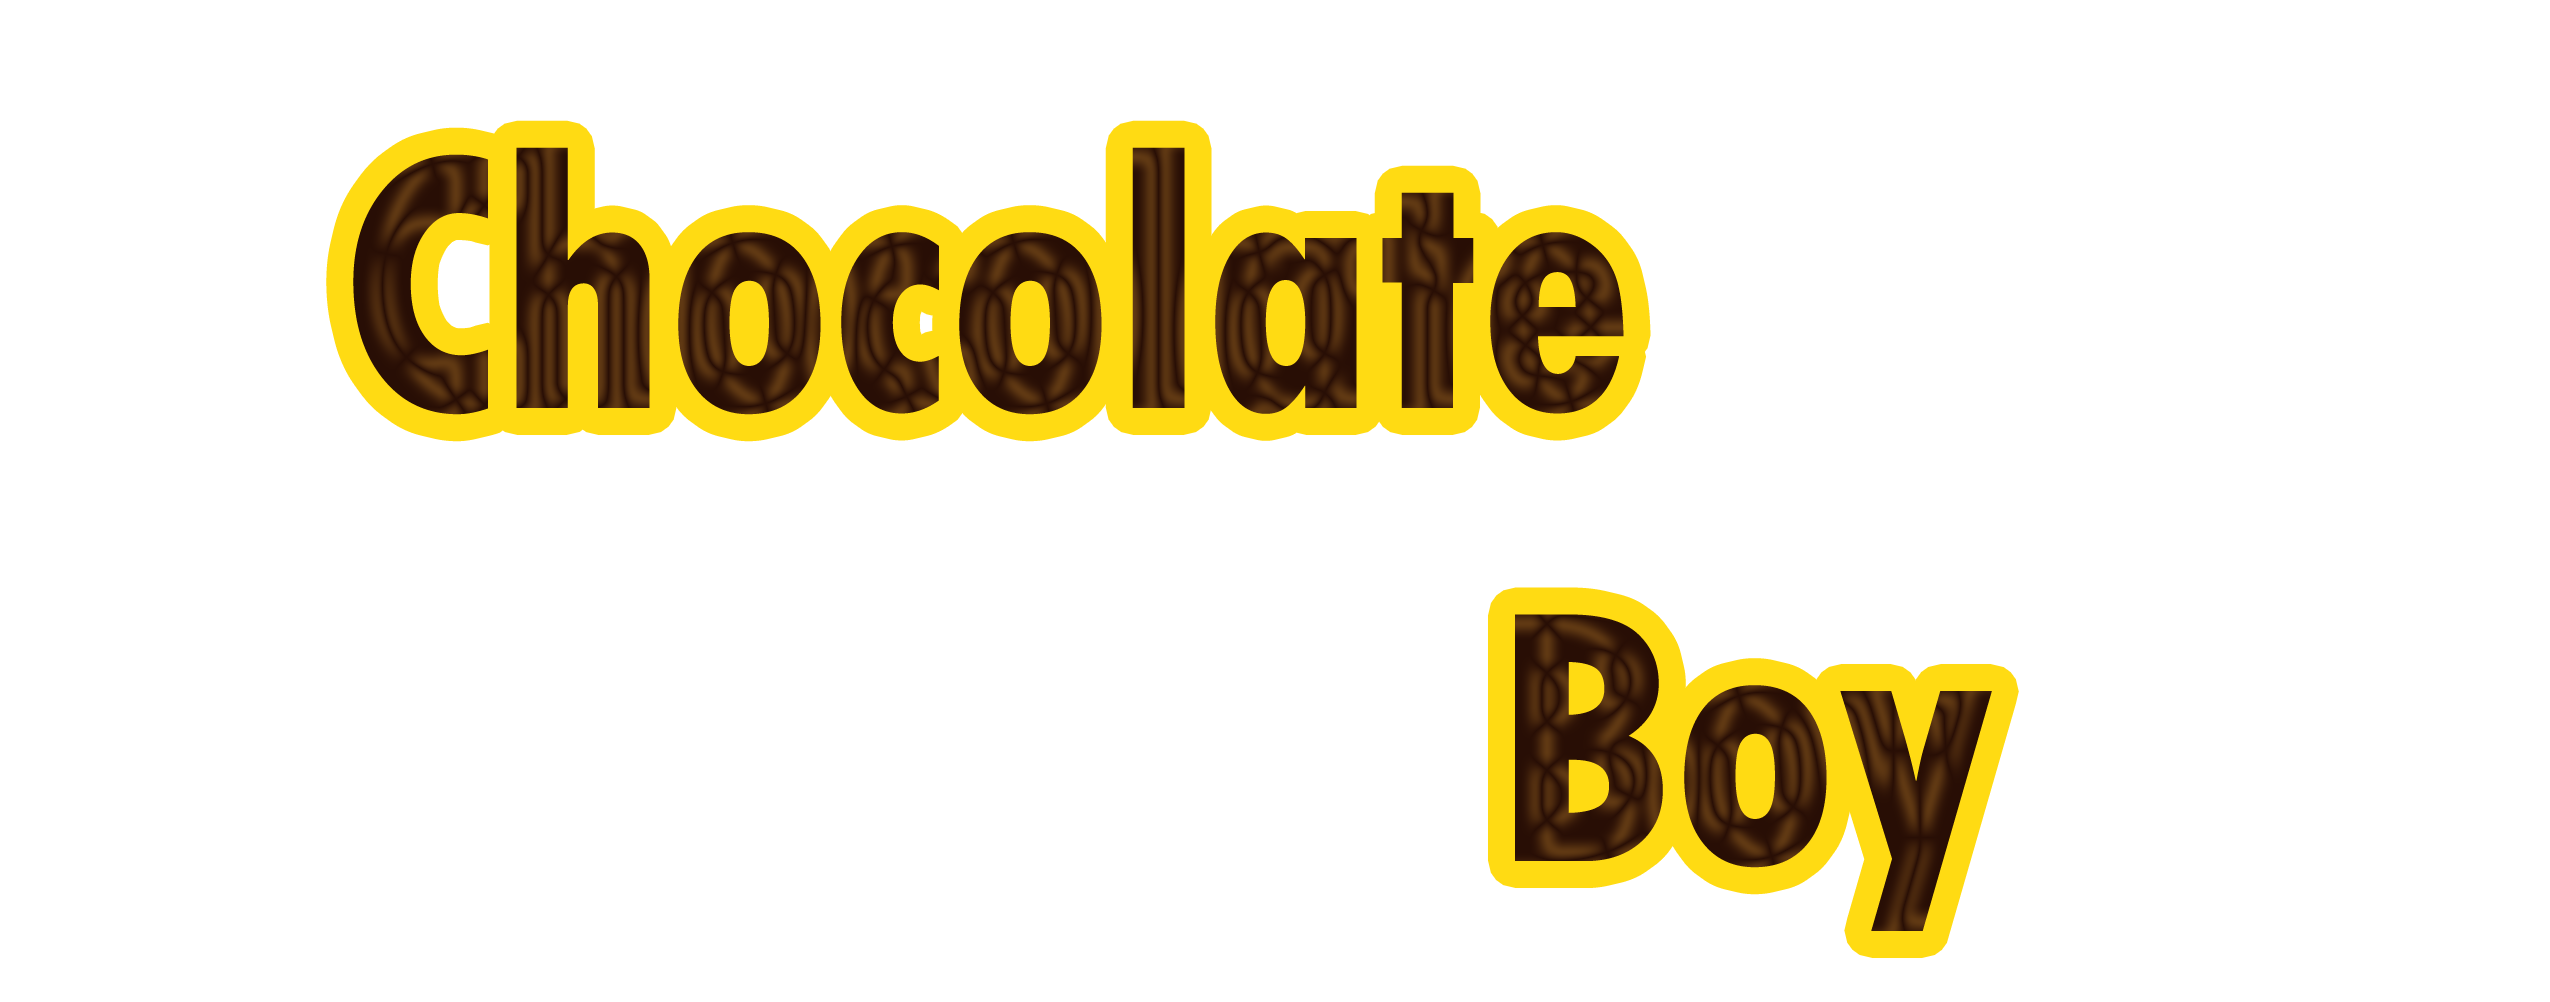 Chocolate Boy #2